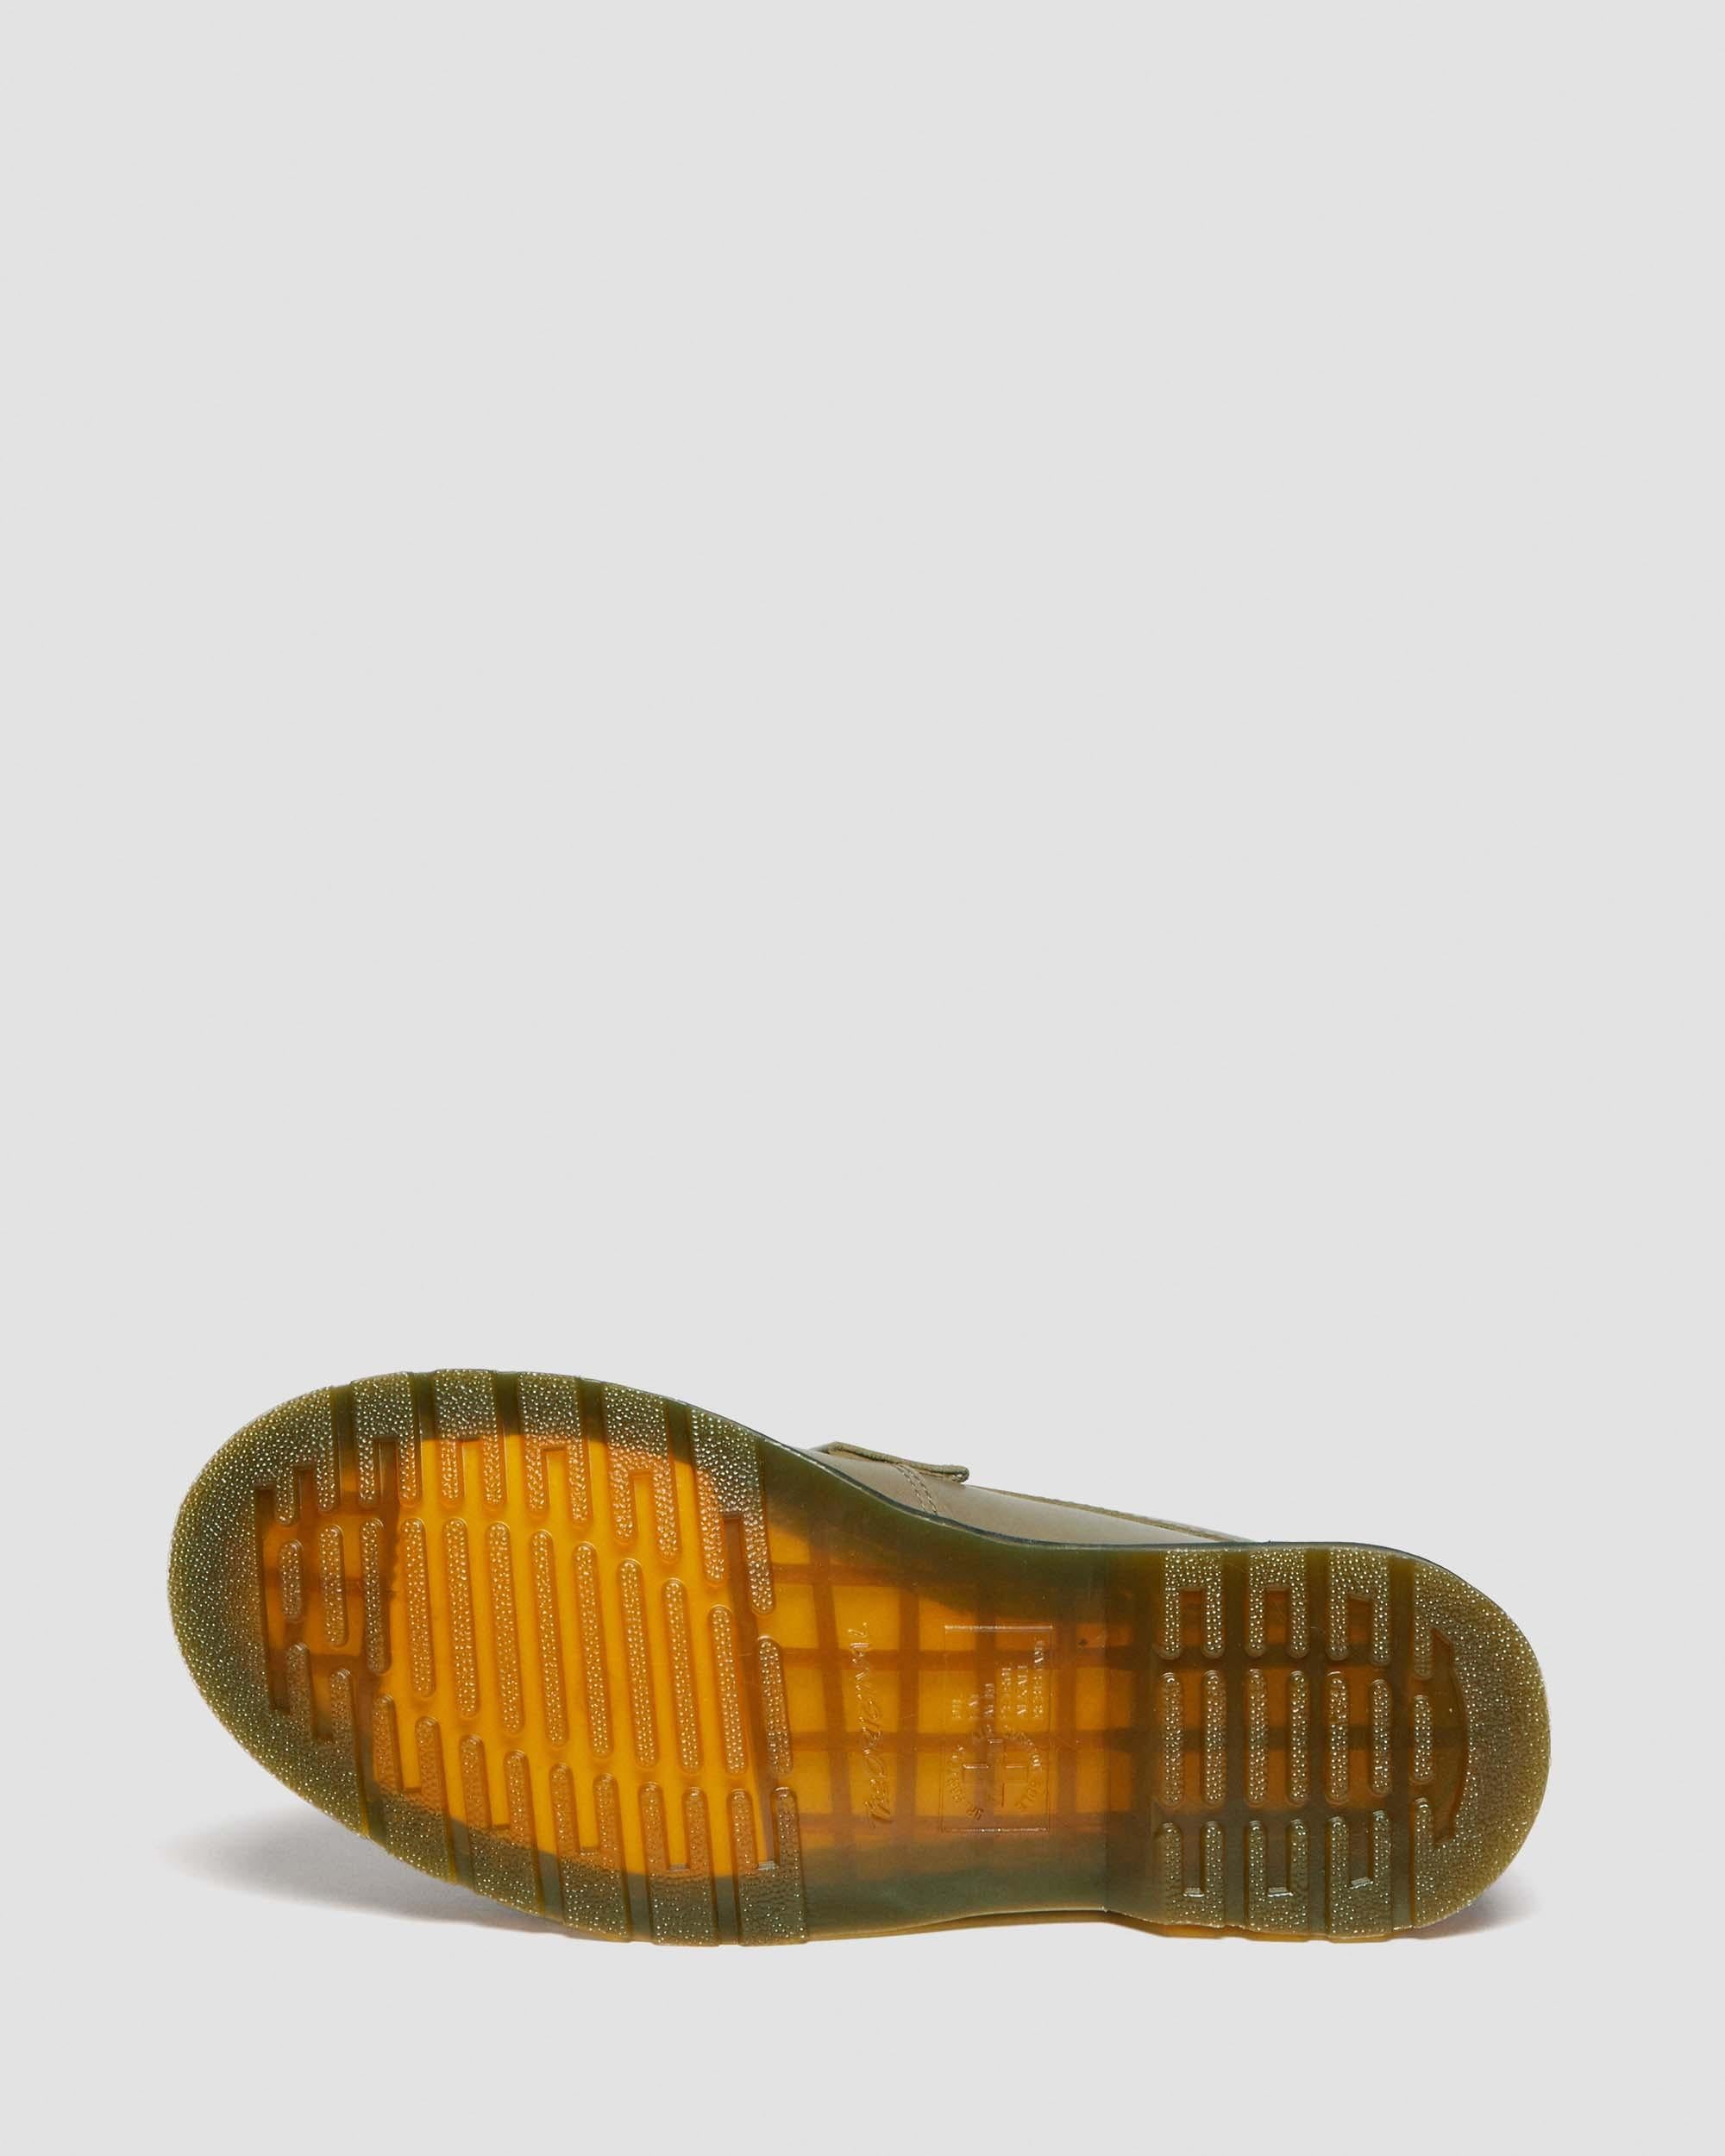 Adrian Yellow Stitch Carrara Leather Shoes